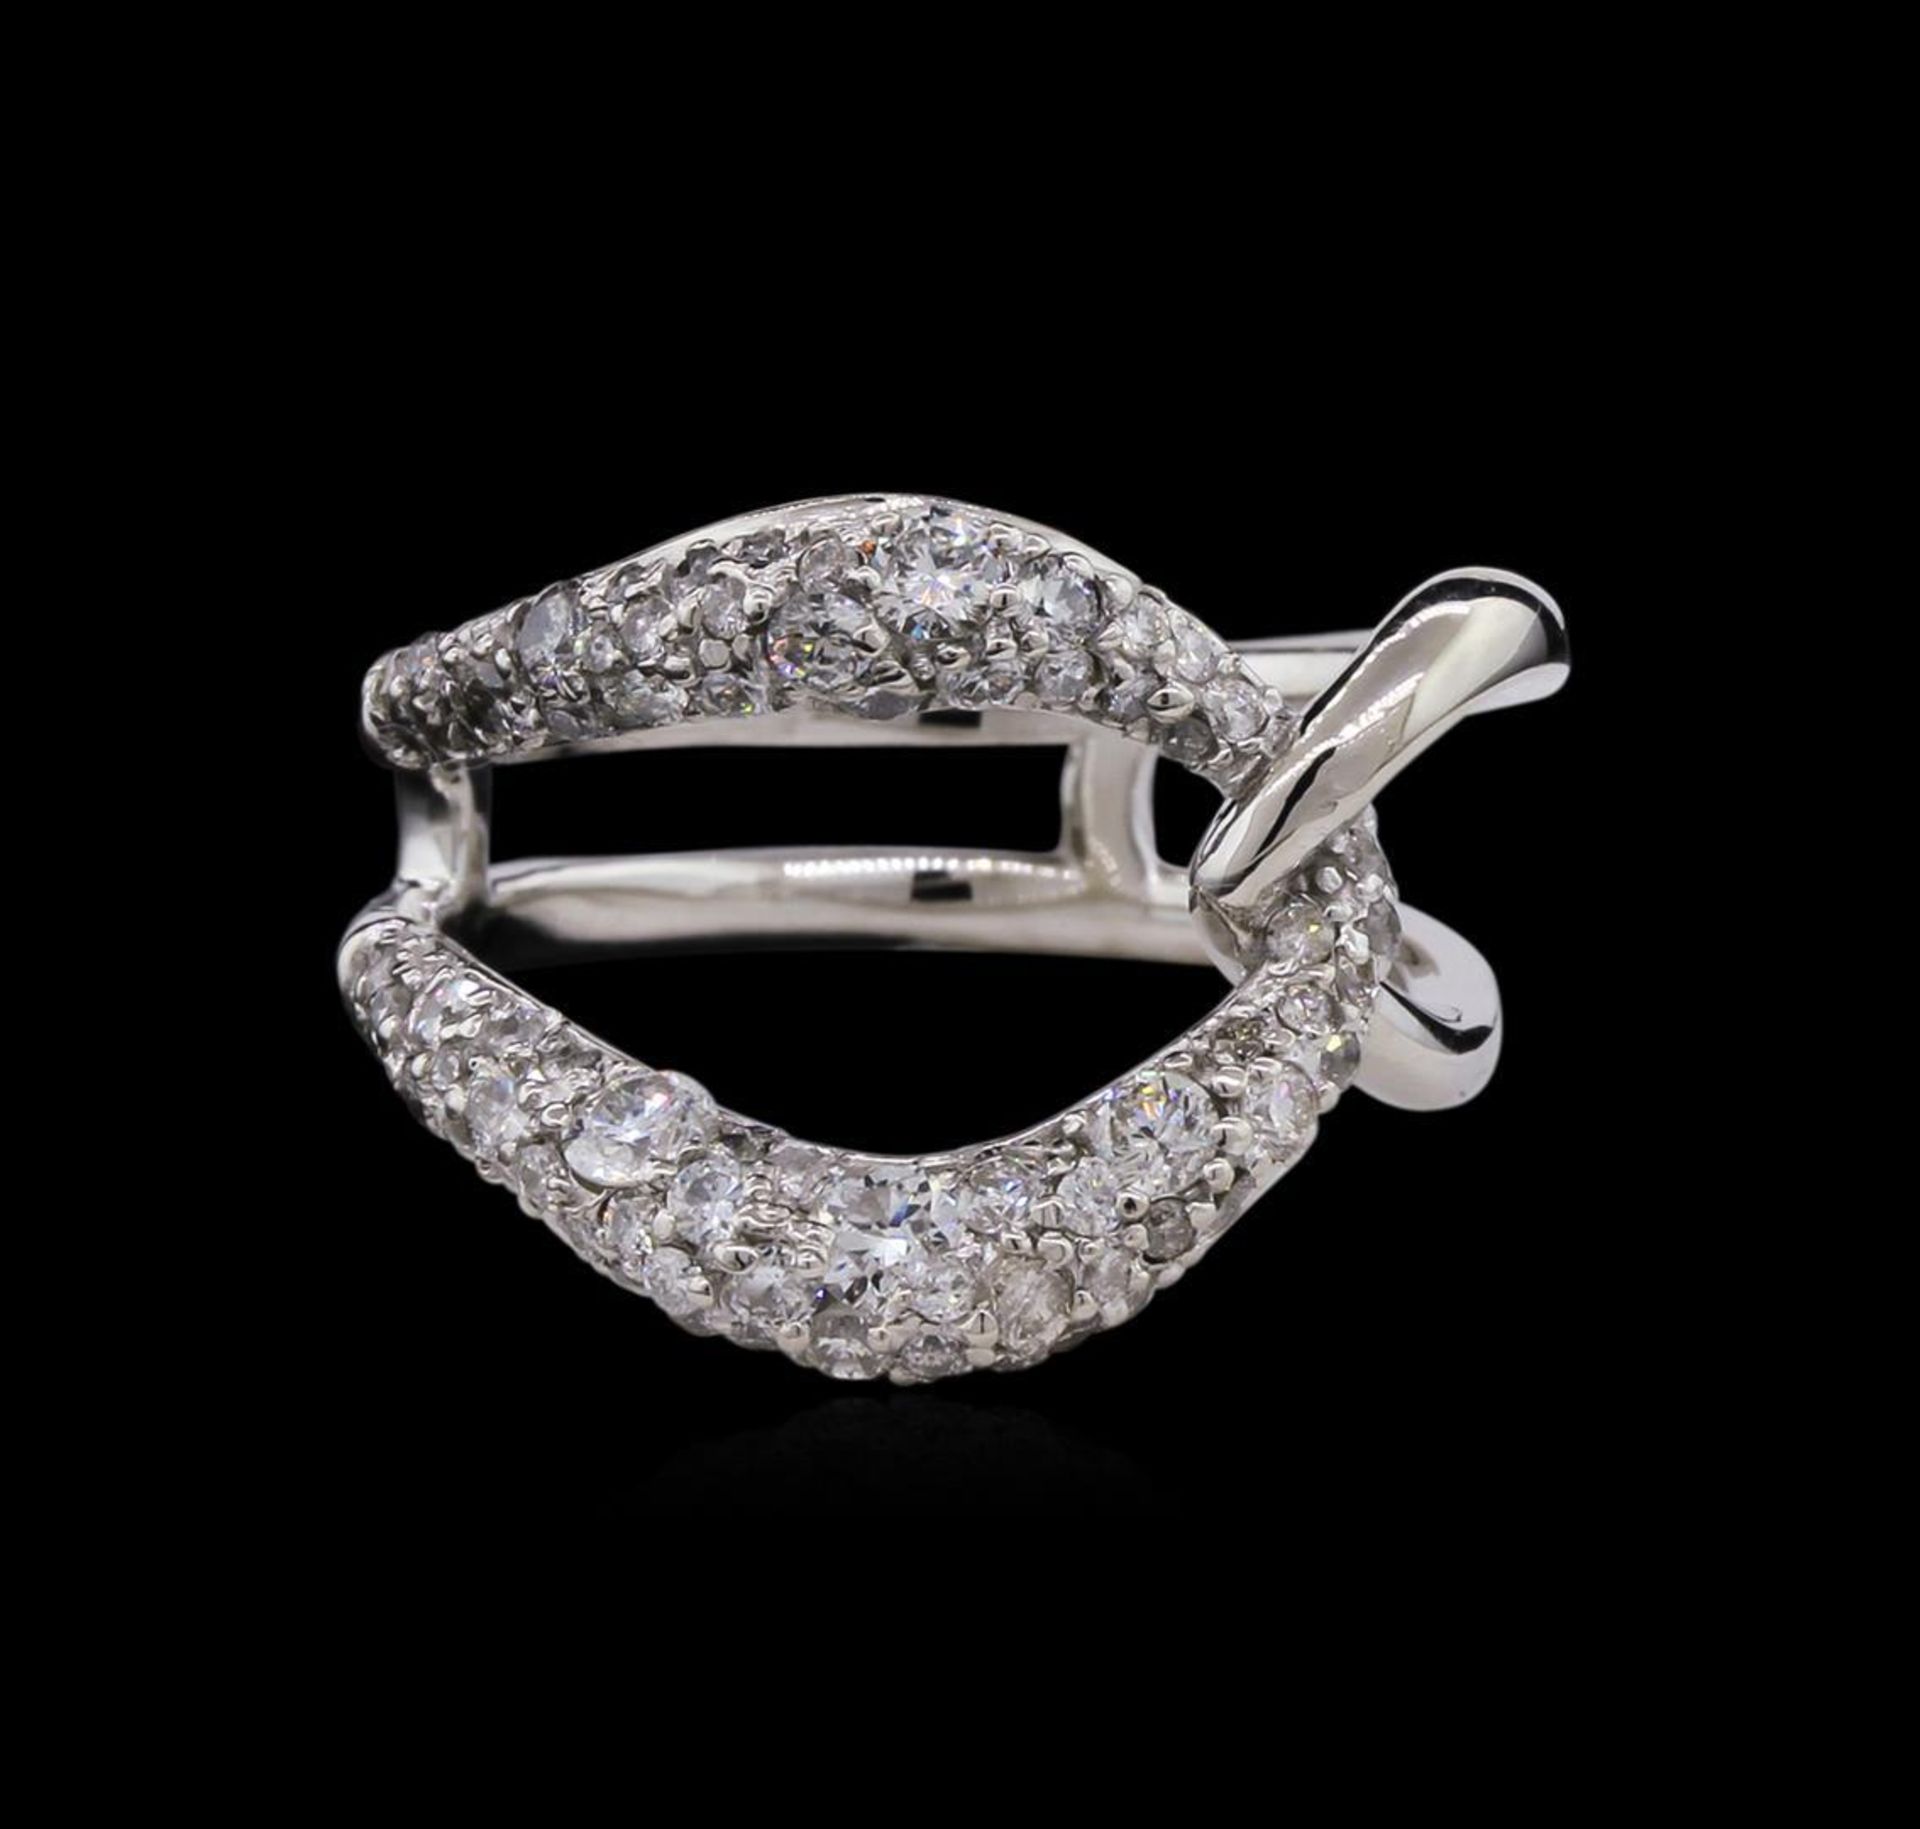 1.10 ctw Diamond Ring - 14KT White Gold - Image 2 of 3